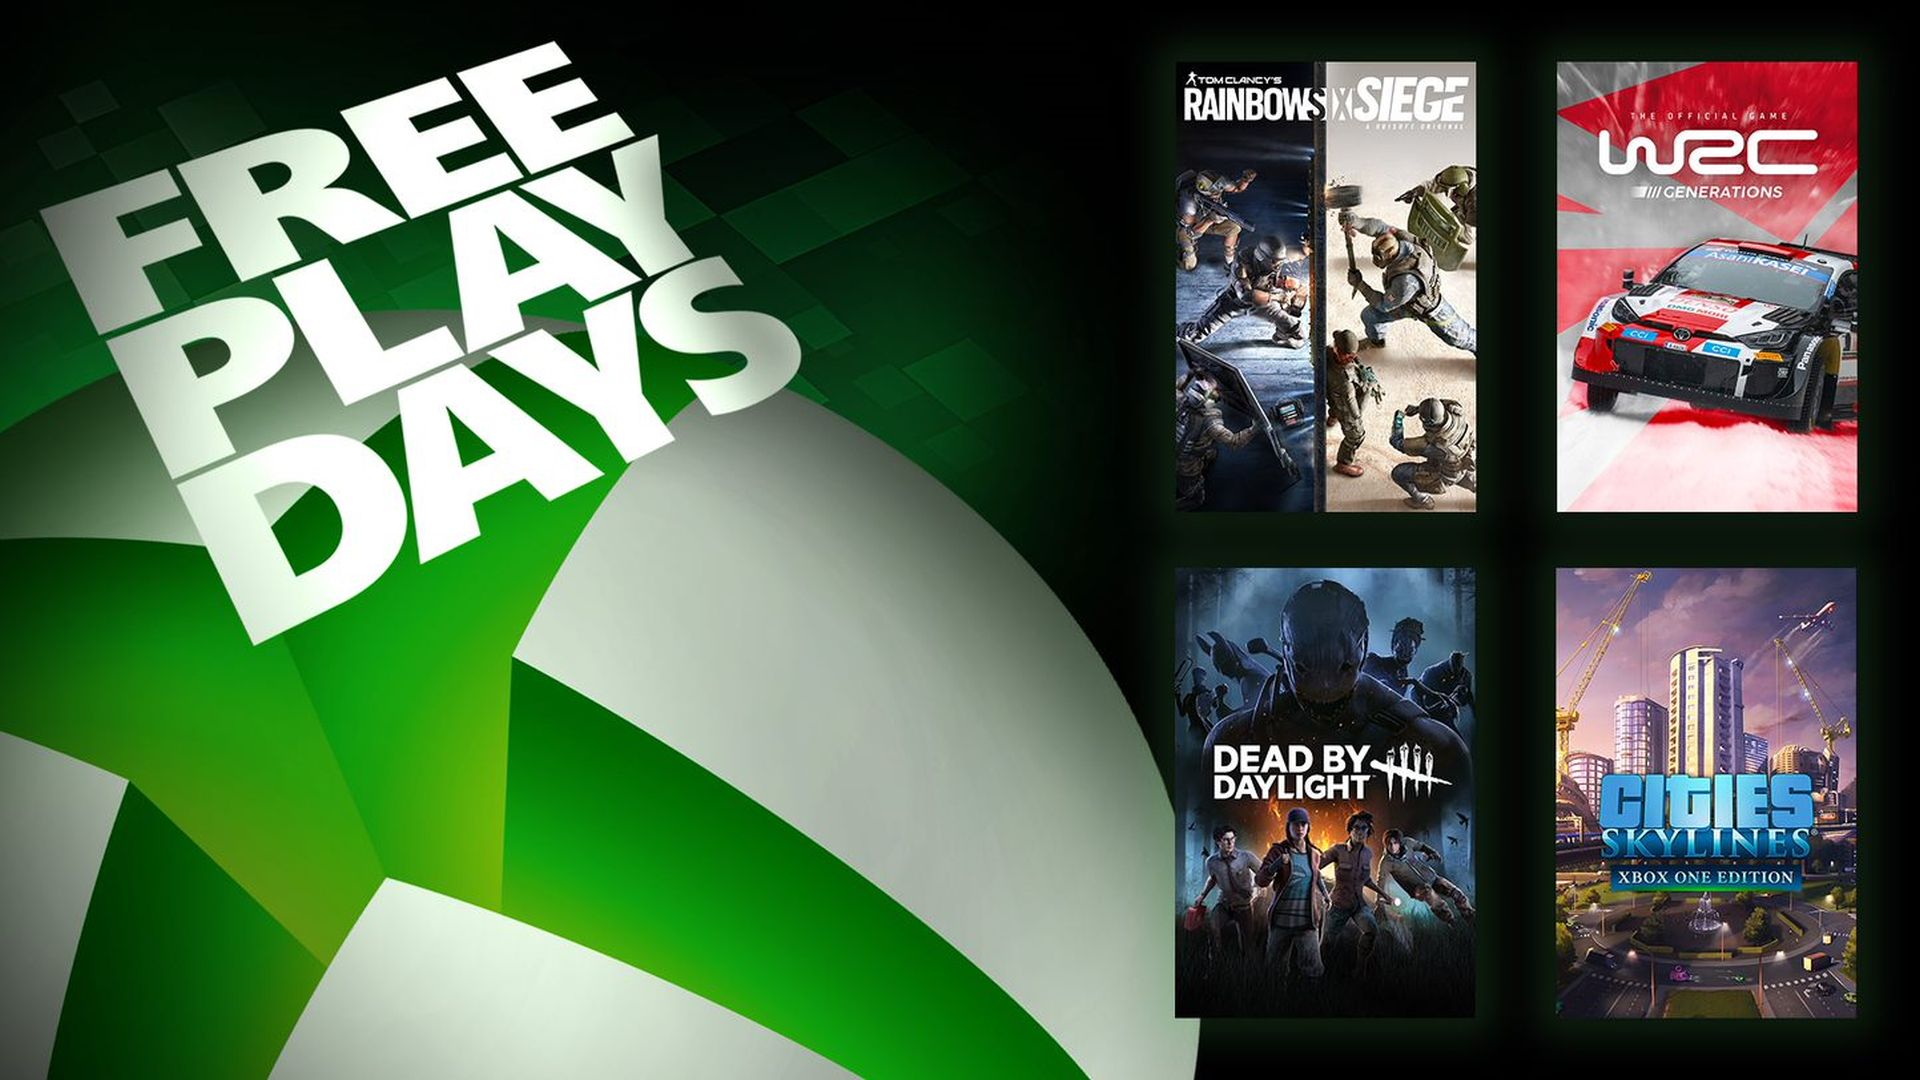 Dnevi brezplačnega igranja – Tom Clancy's Rainbow Six Siege, WRC Generations, Dead by Daylight in Cities: Skylines – Xbox One Edition